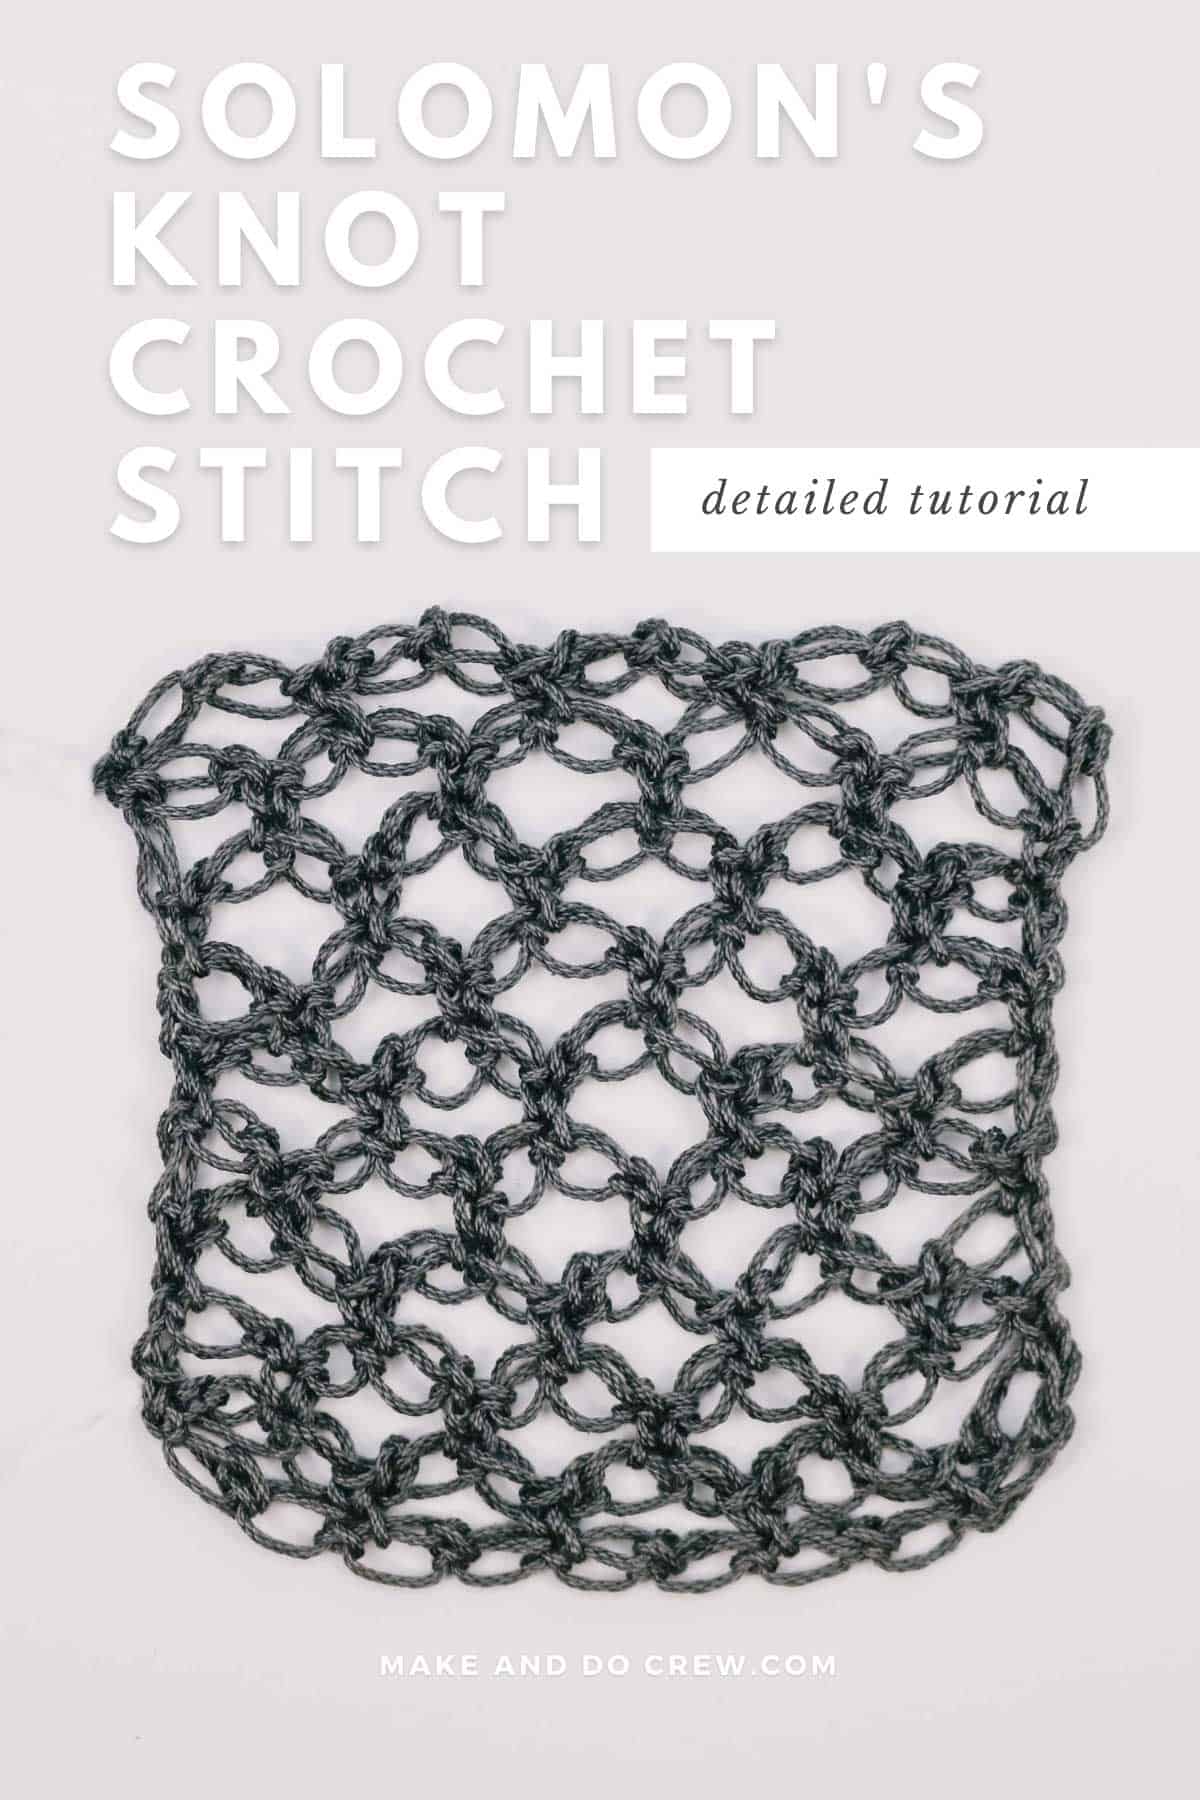 A finished pattern using Solomon's knot crochet stitch.